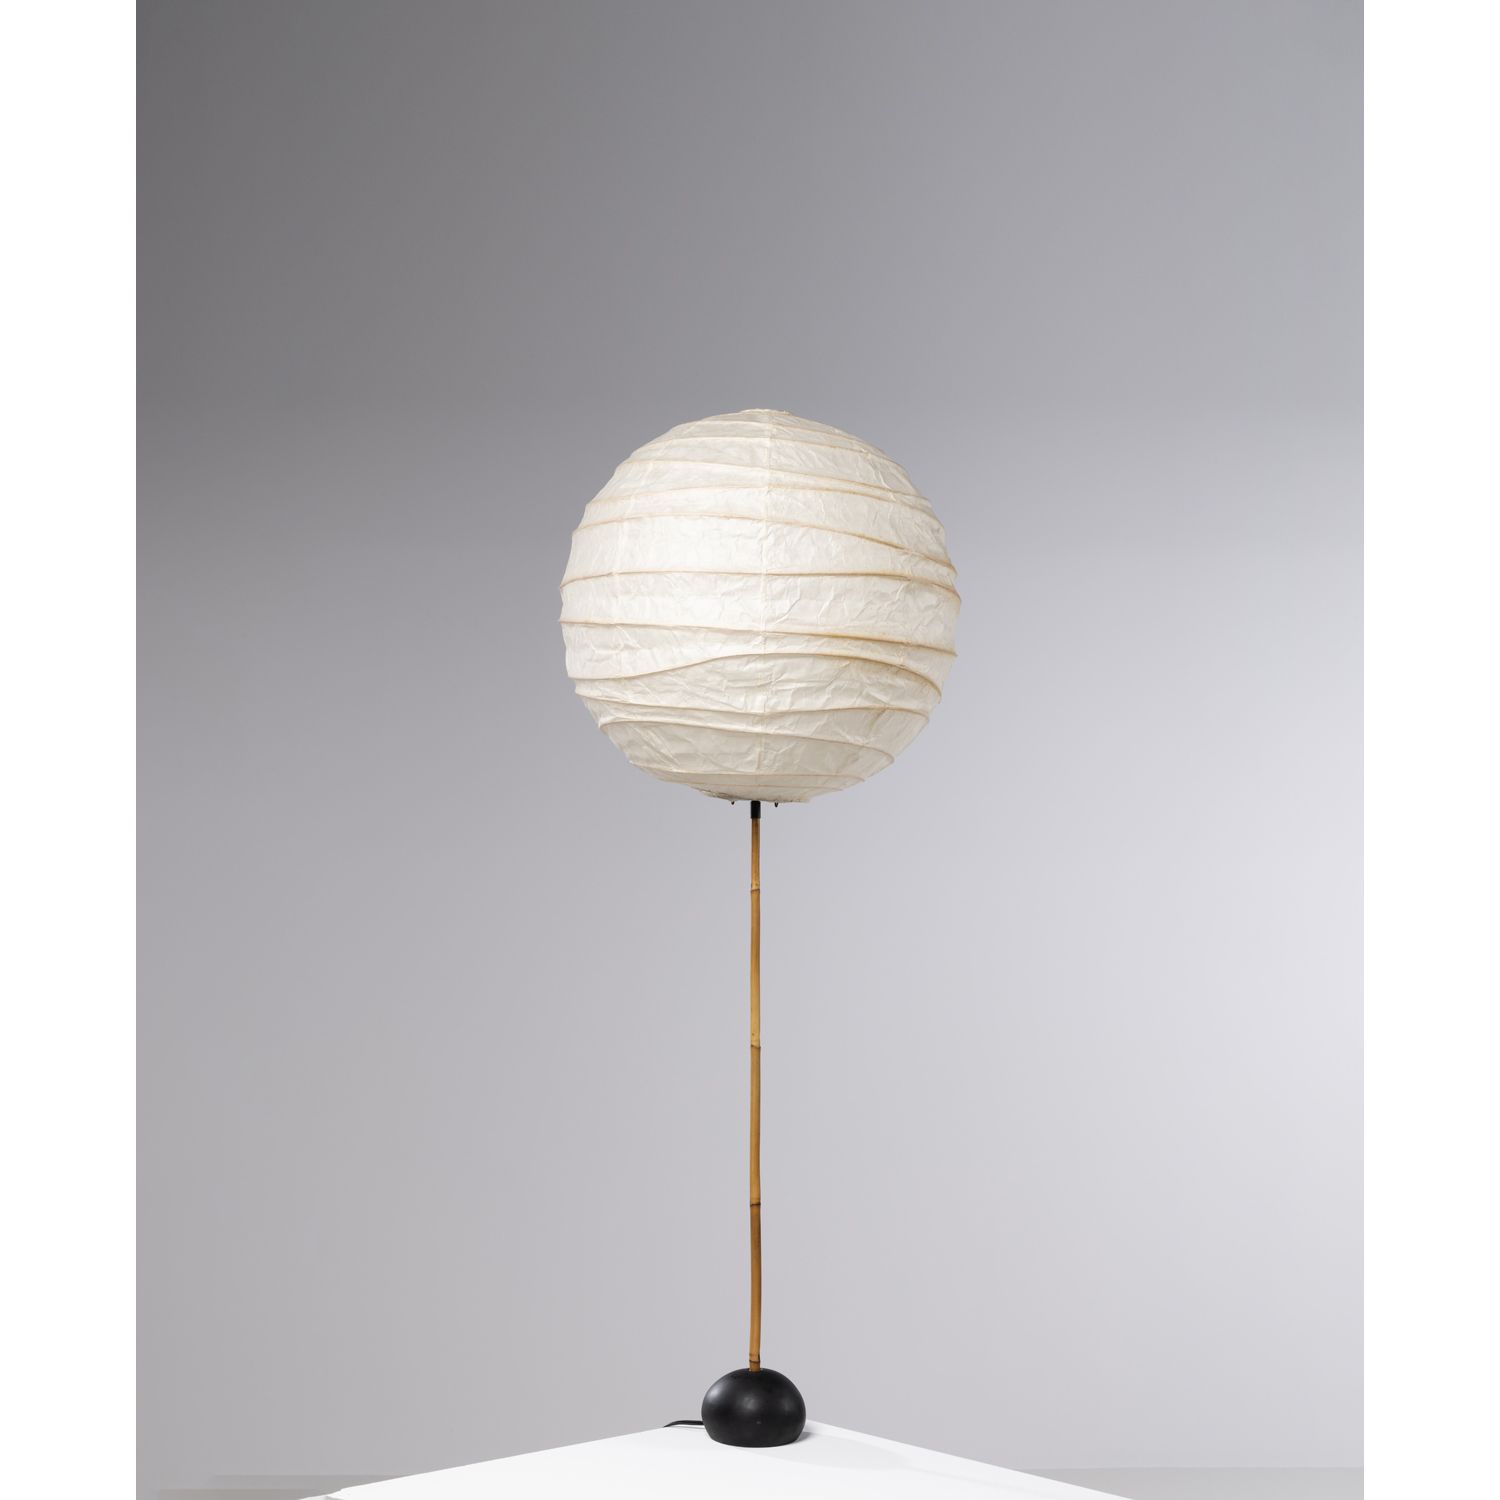 Null Isamu Noguchi (1944-1988)

Akari series - Model 20S

Floor lamp

Washi pape&hellip;